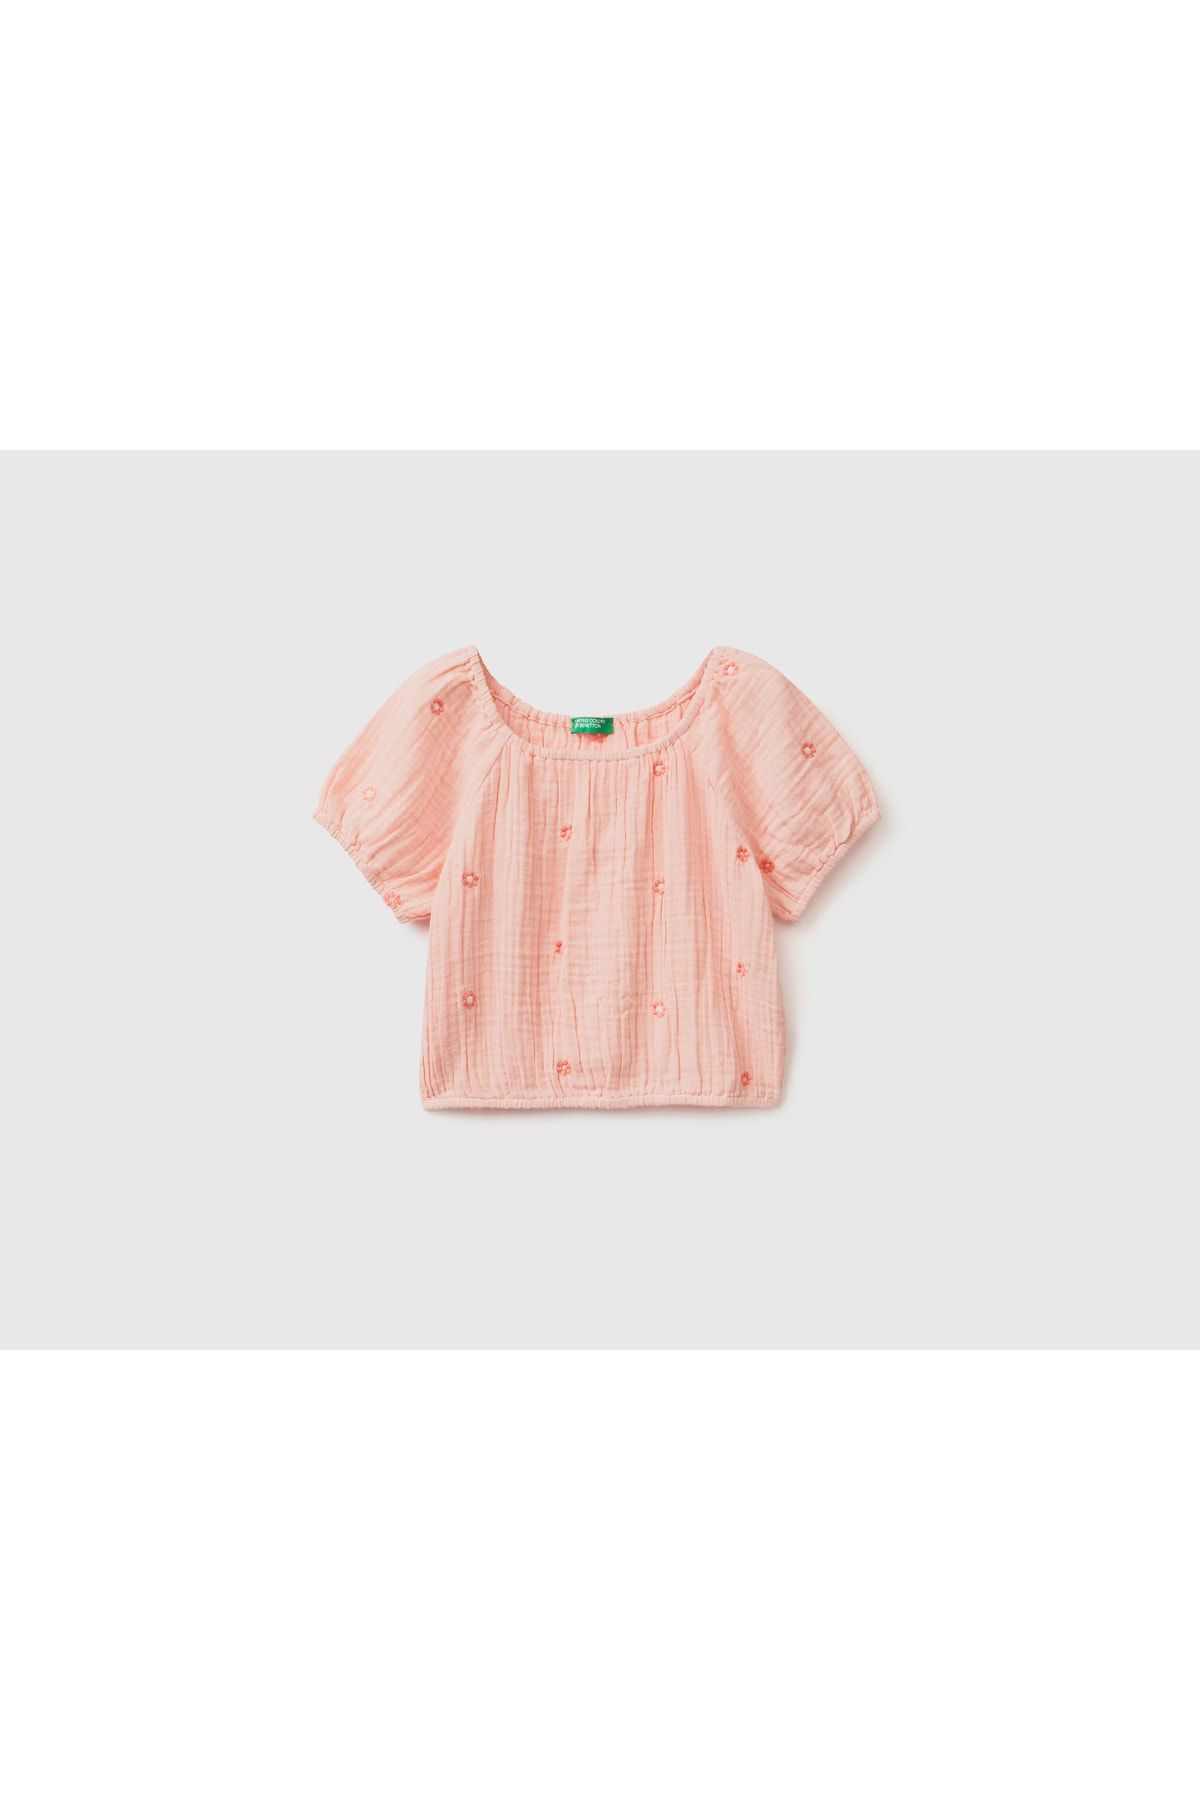 United Colors of Benetton Kız Çocuk Açık Pembe Işlemeli Bluz Açık Pembe